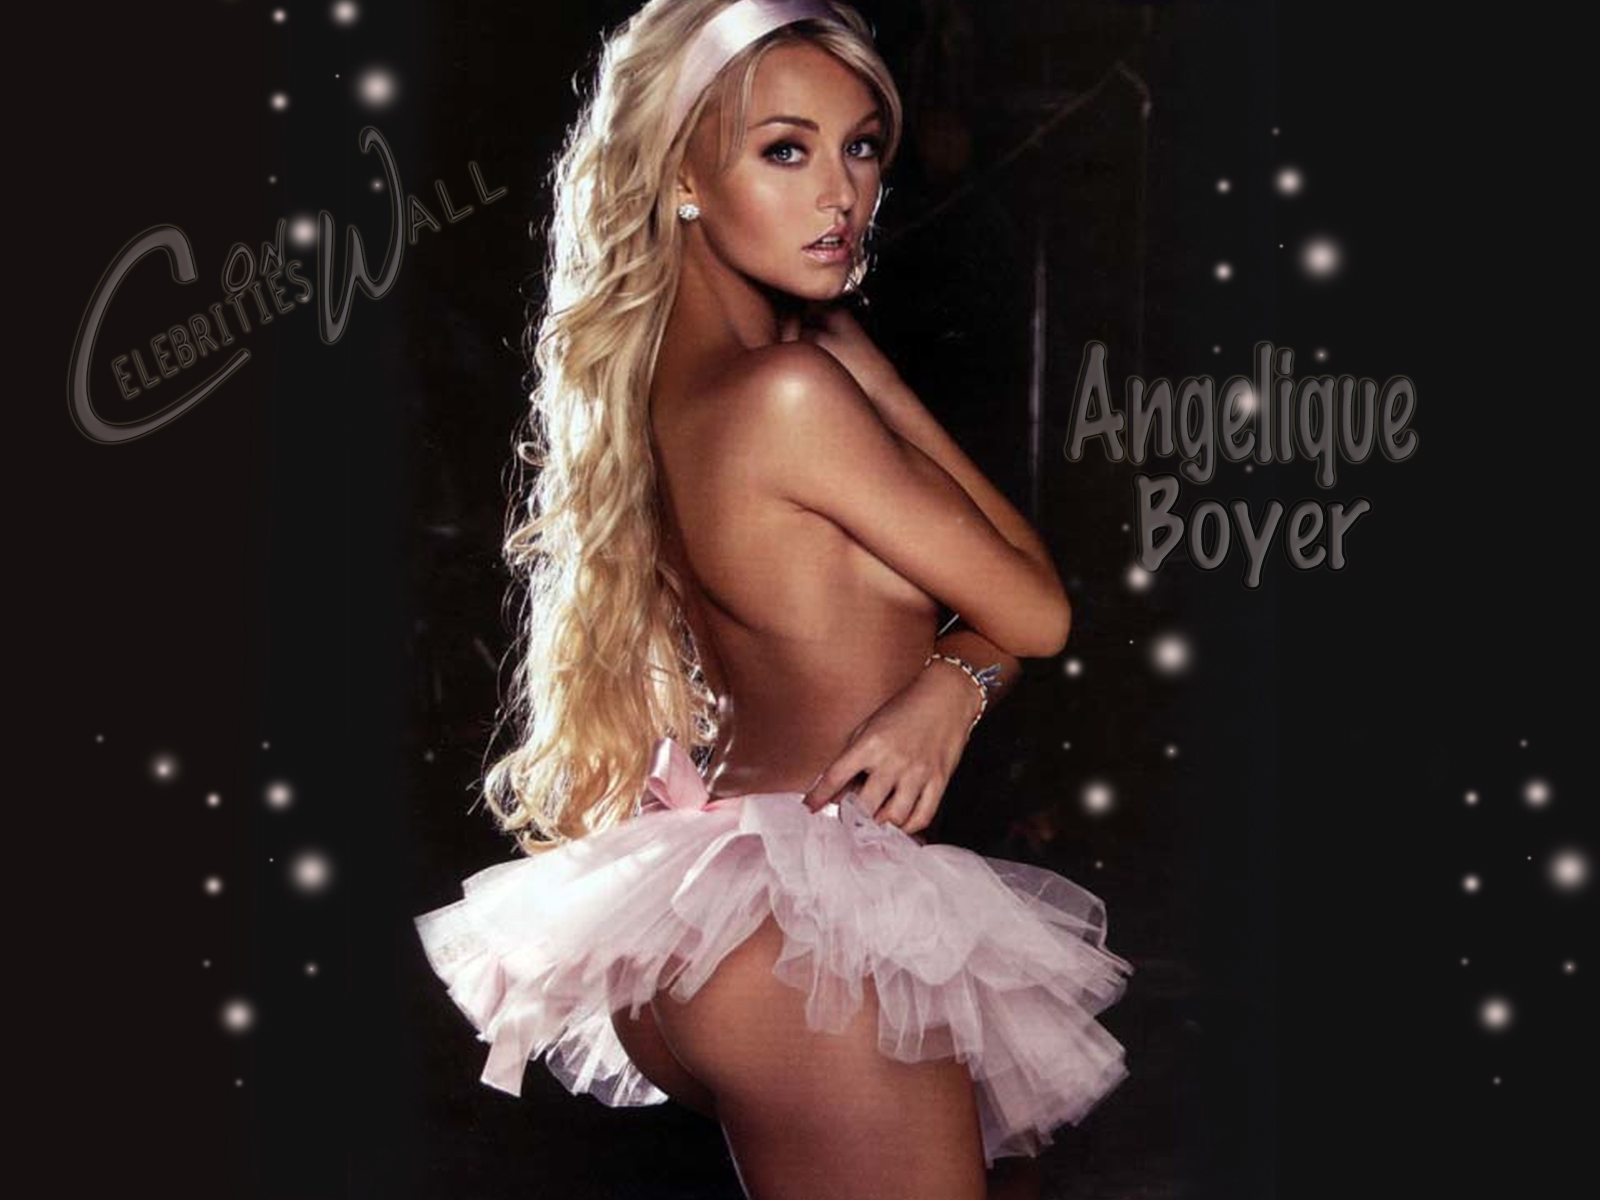 nude Angelique boyer